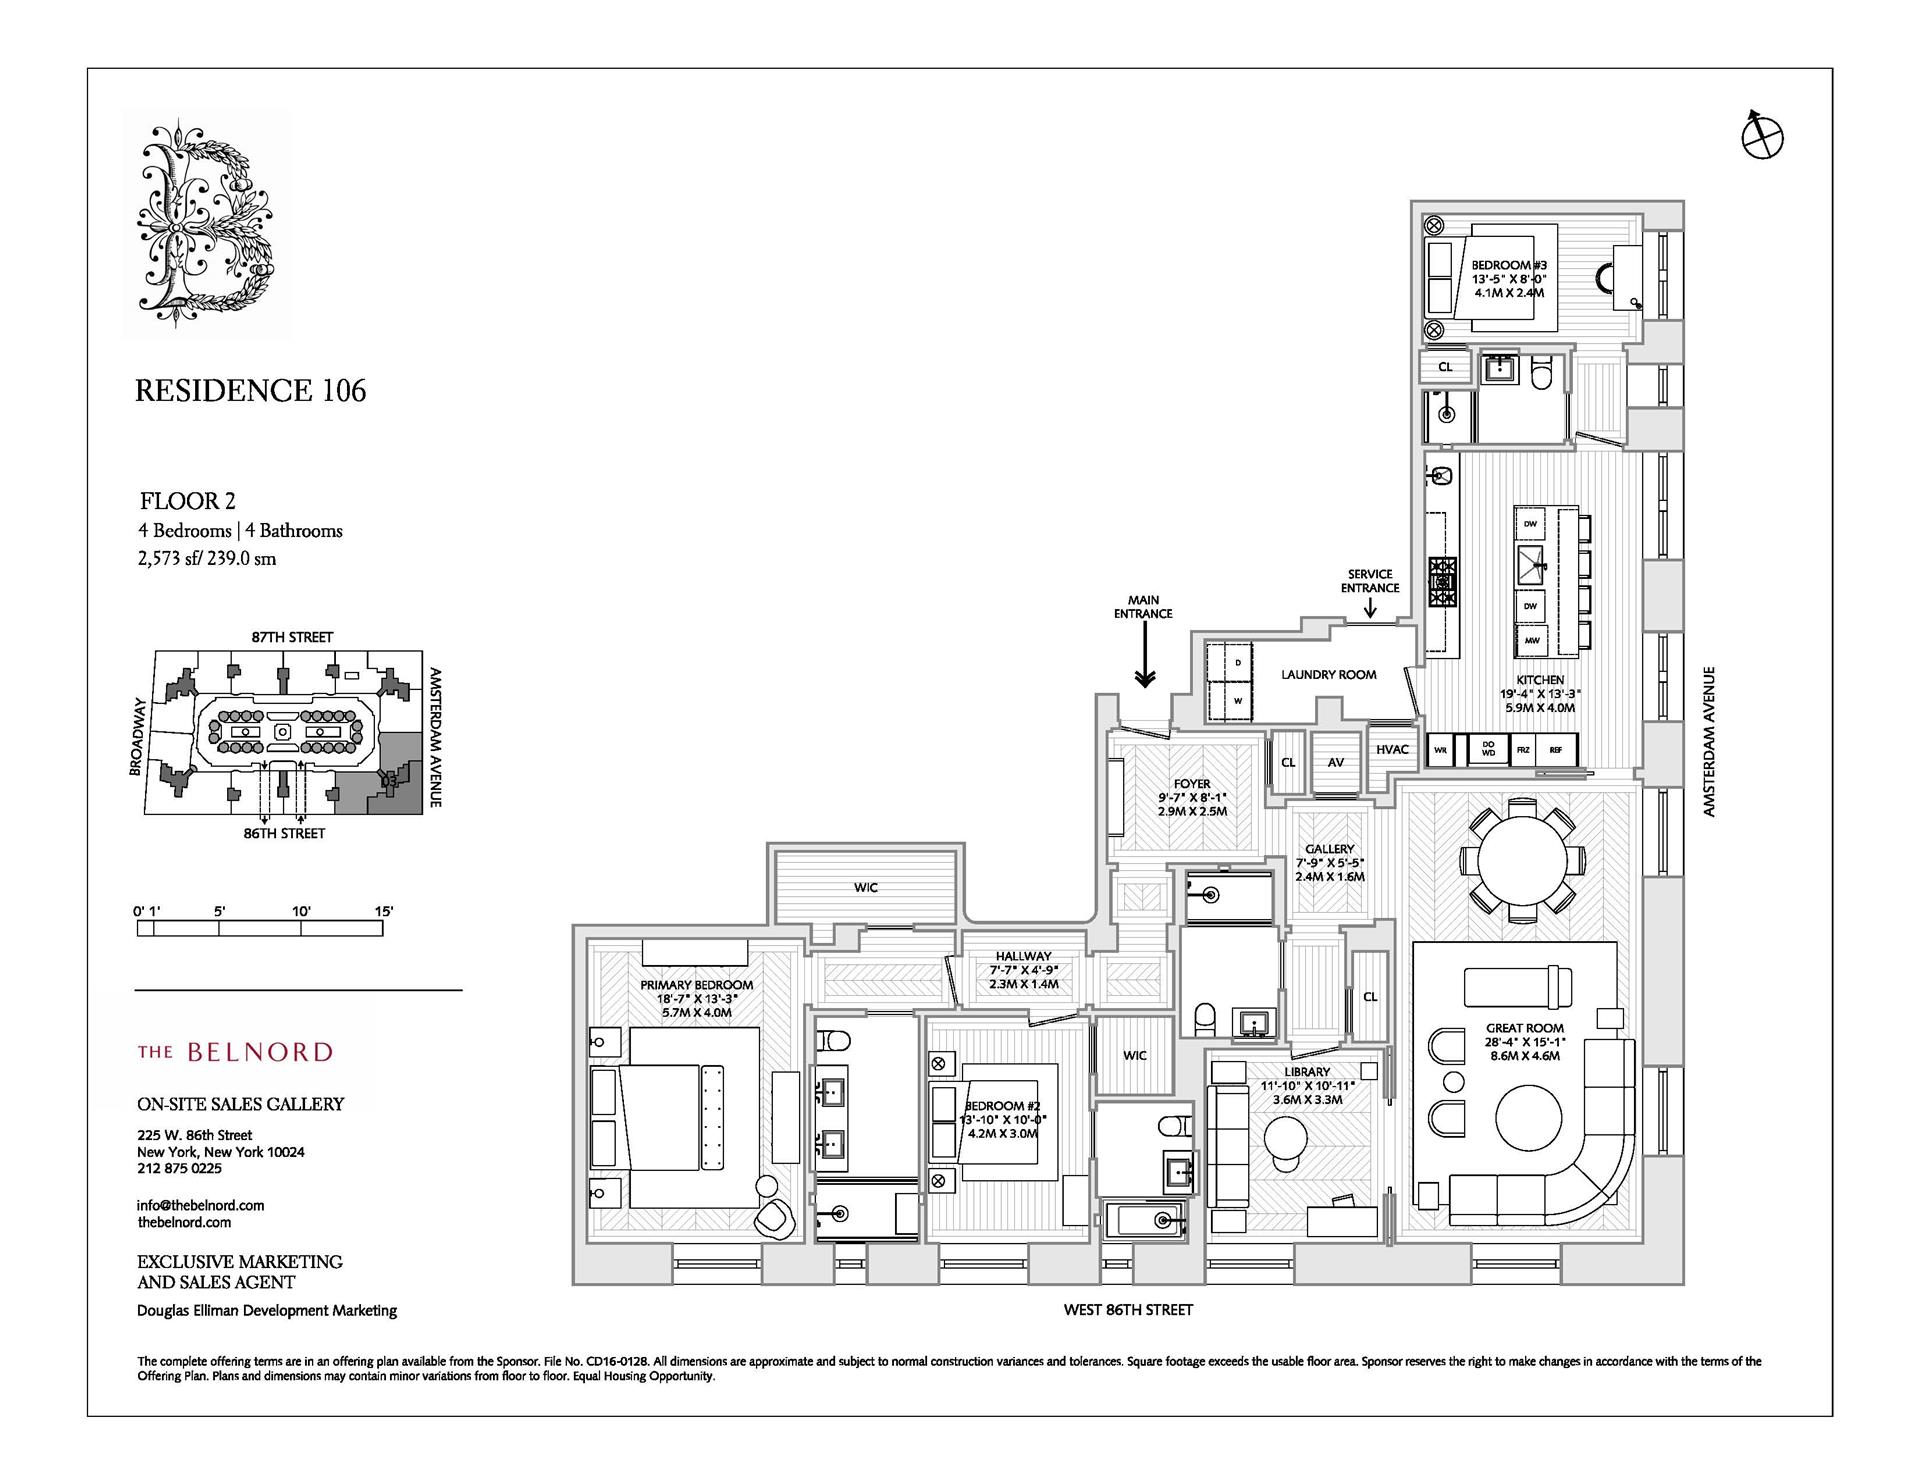 Floorplan for 225 West 86th Street, 106